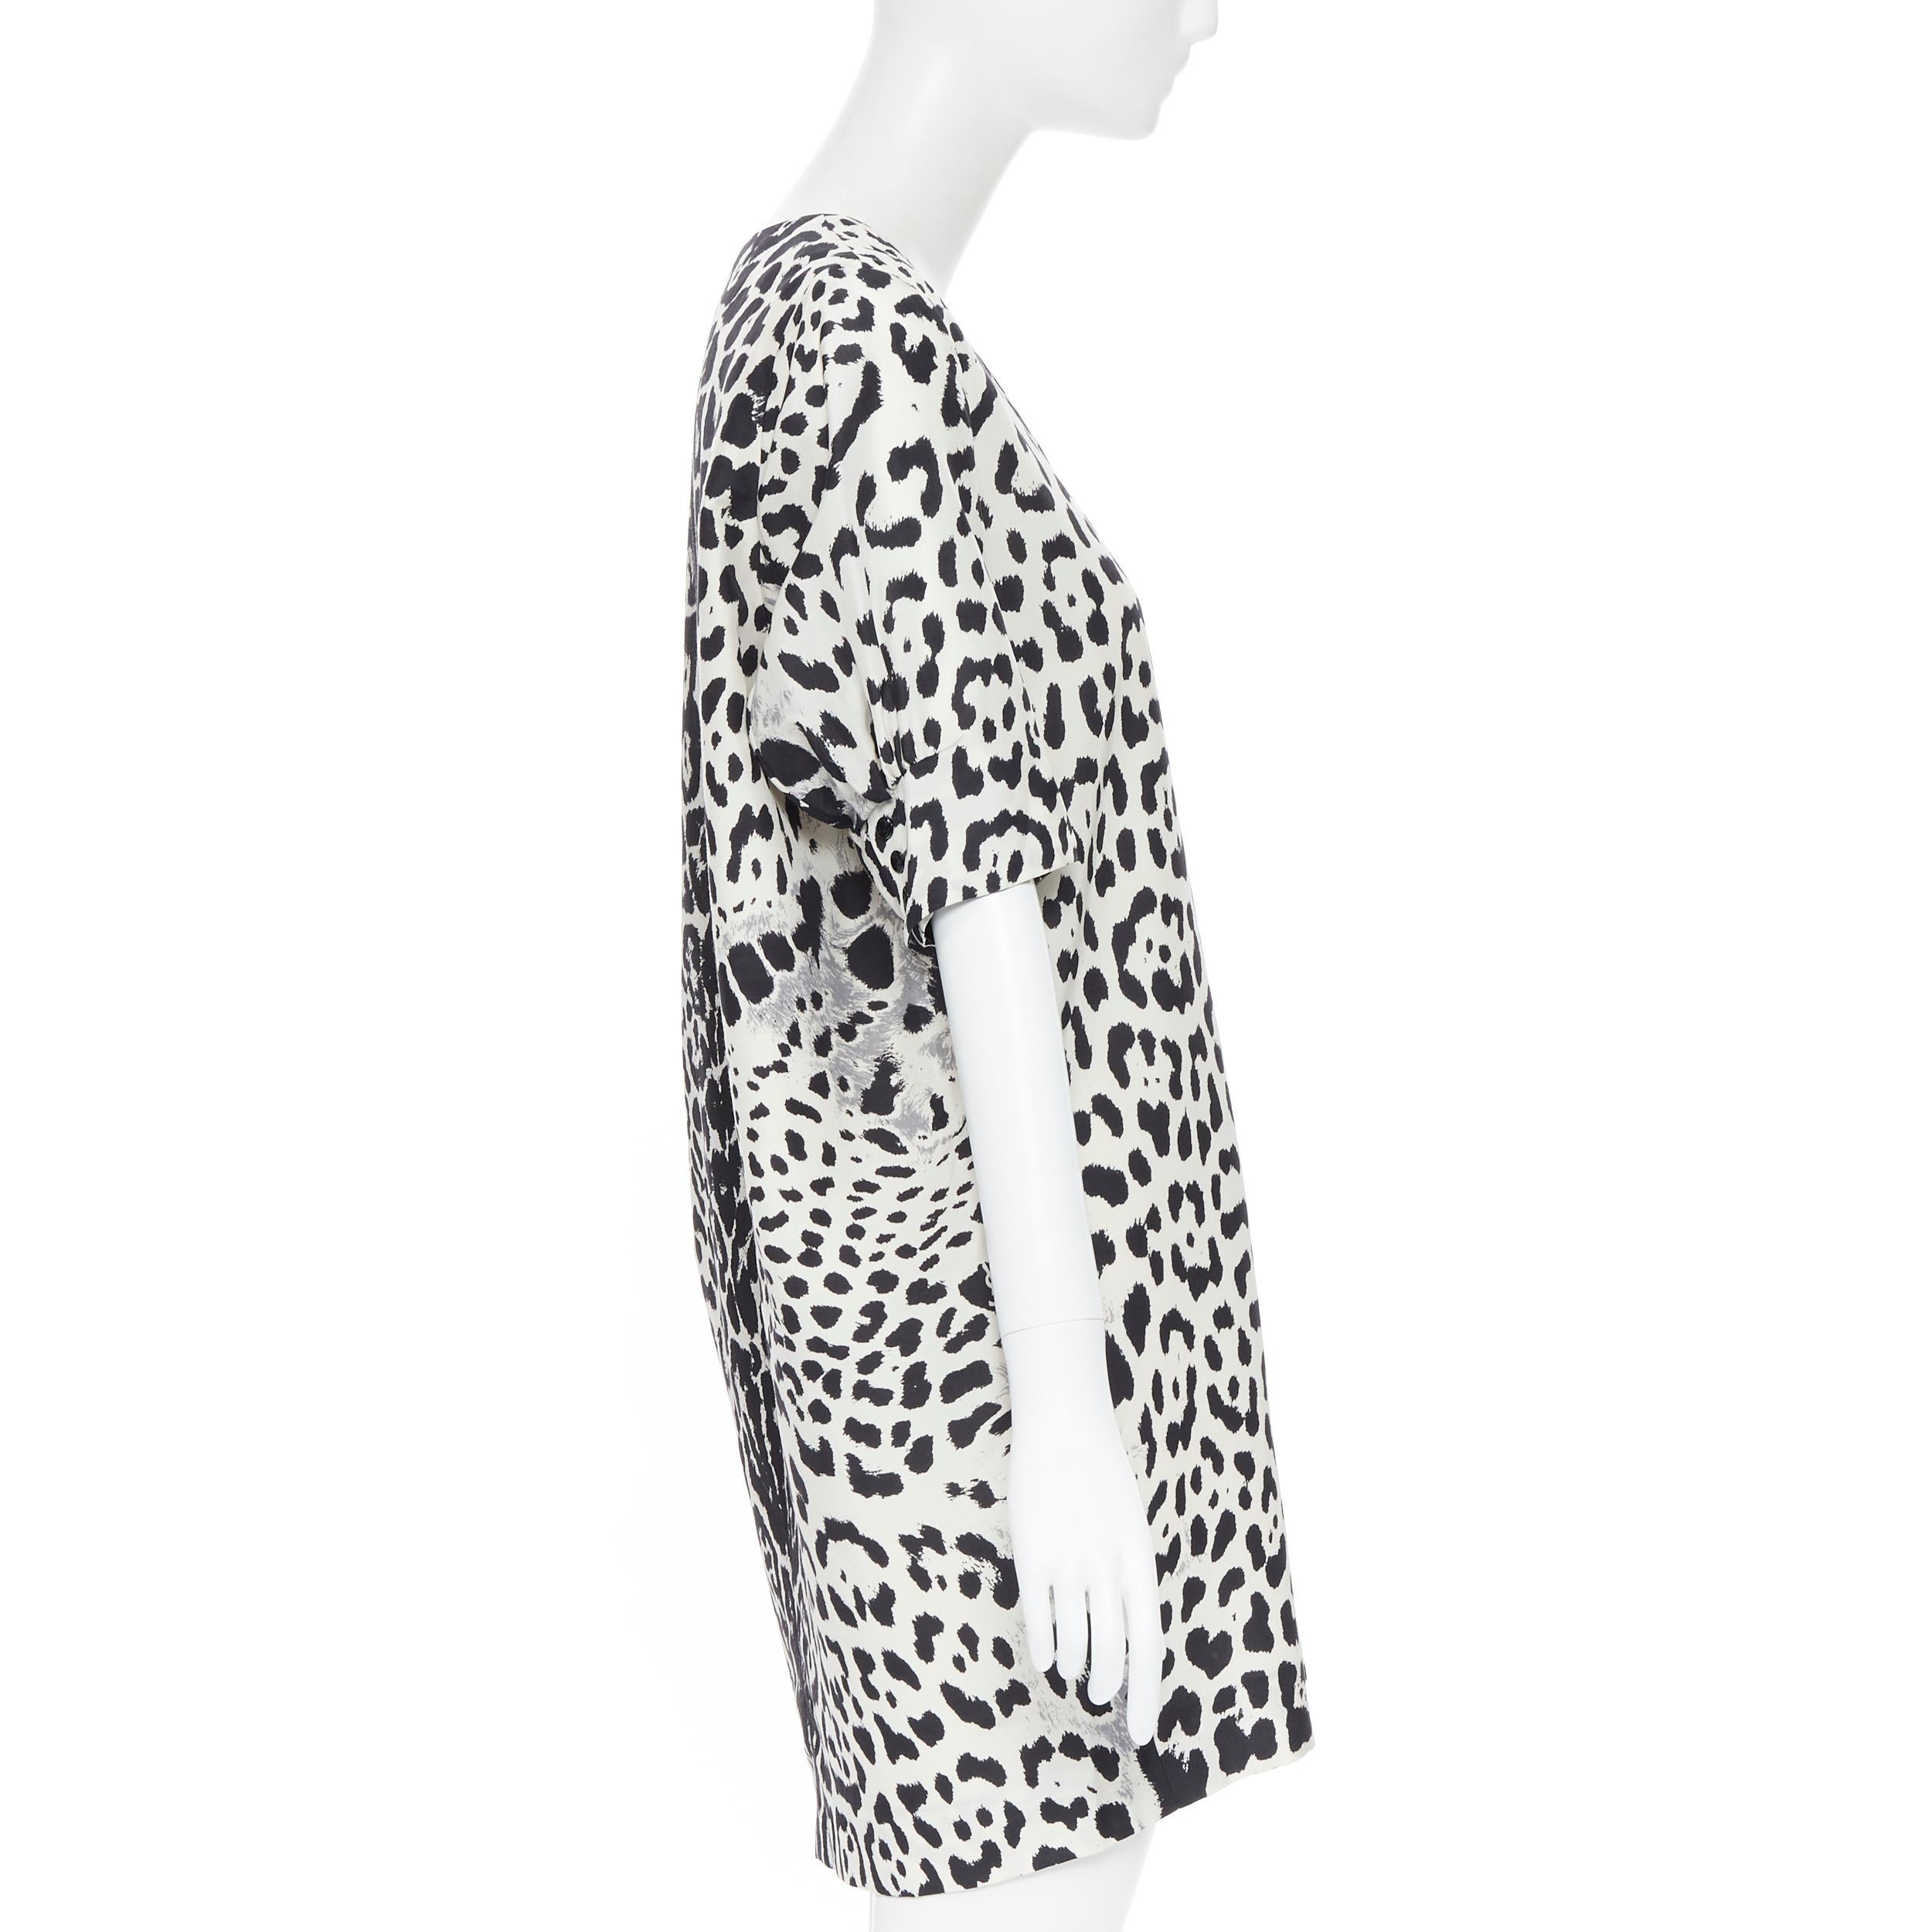 YVES SAINT LAURENT 2012 100% silk black white leopard spot casual dress FR38 1